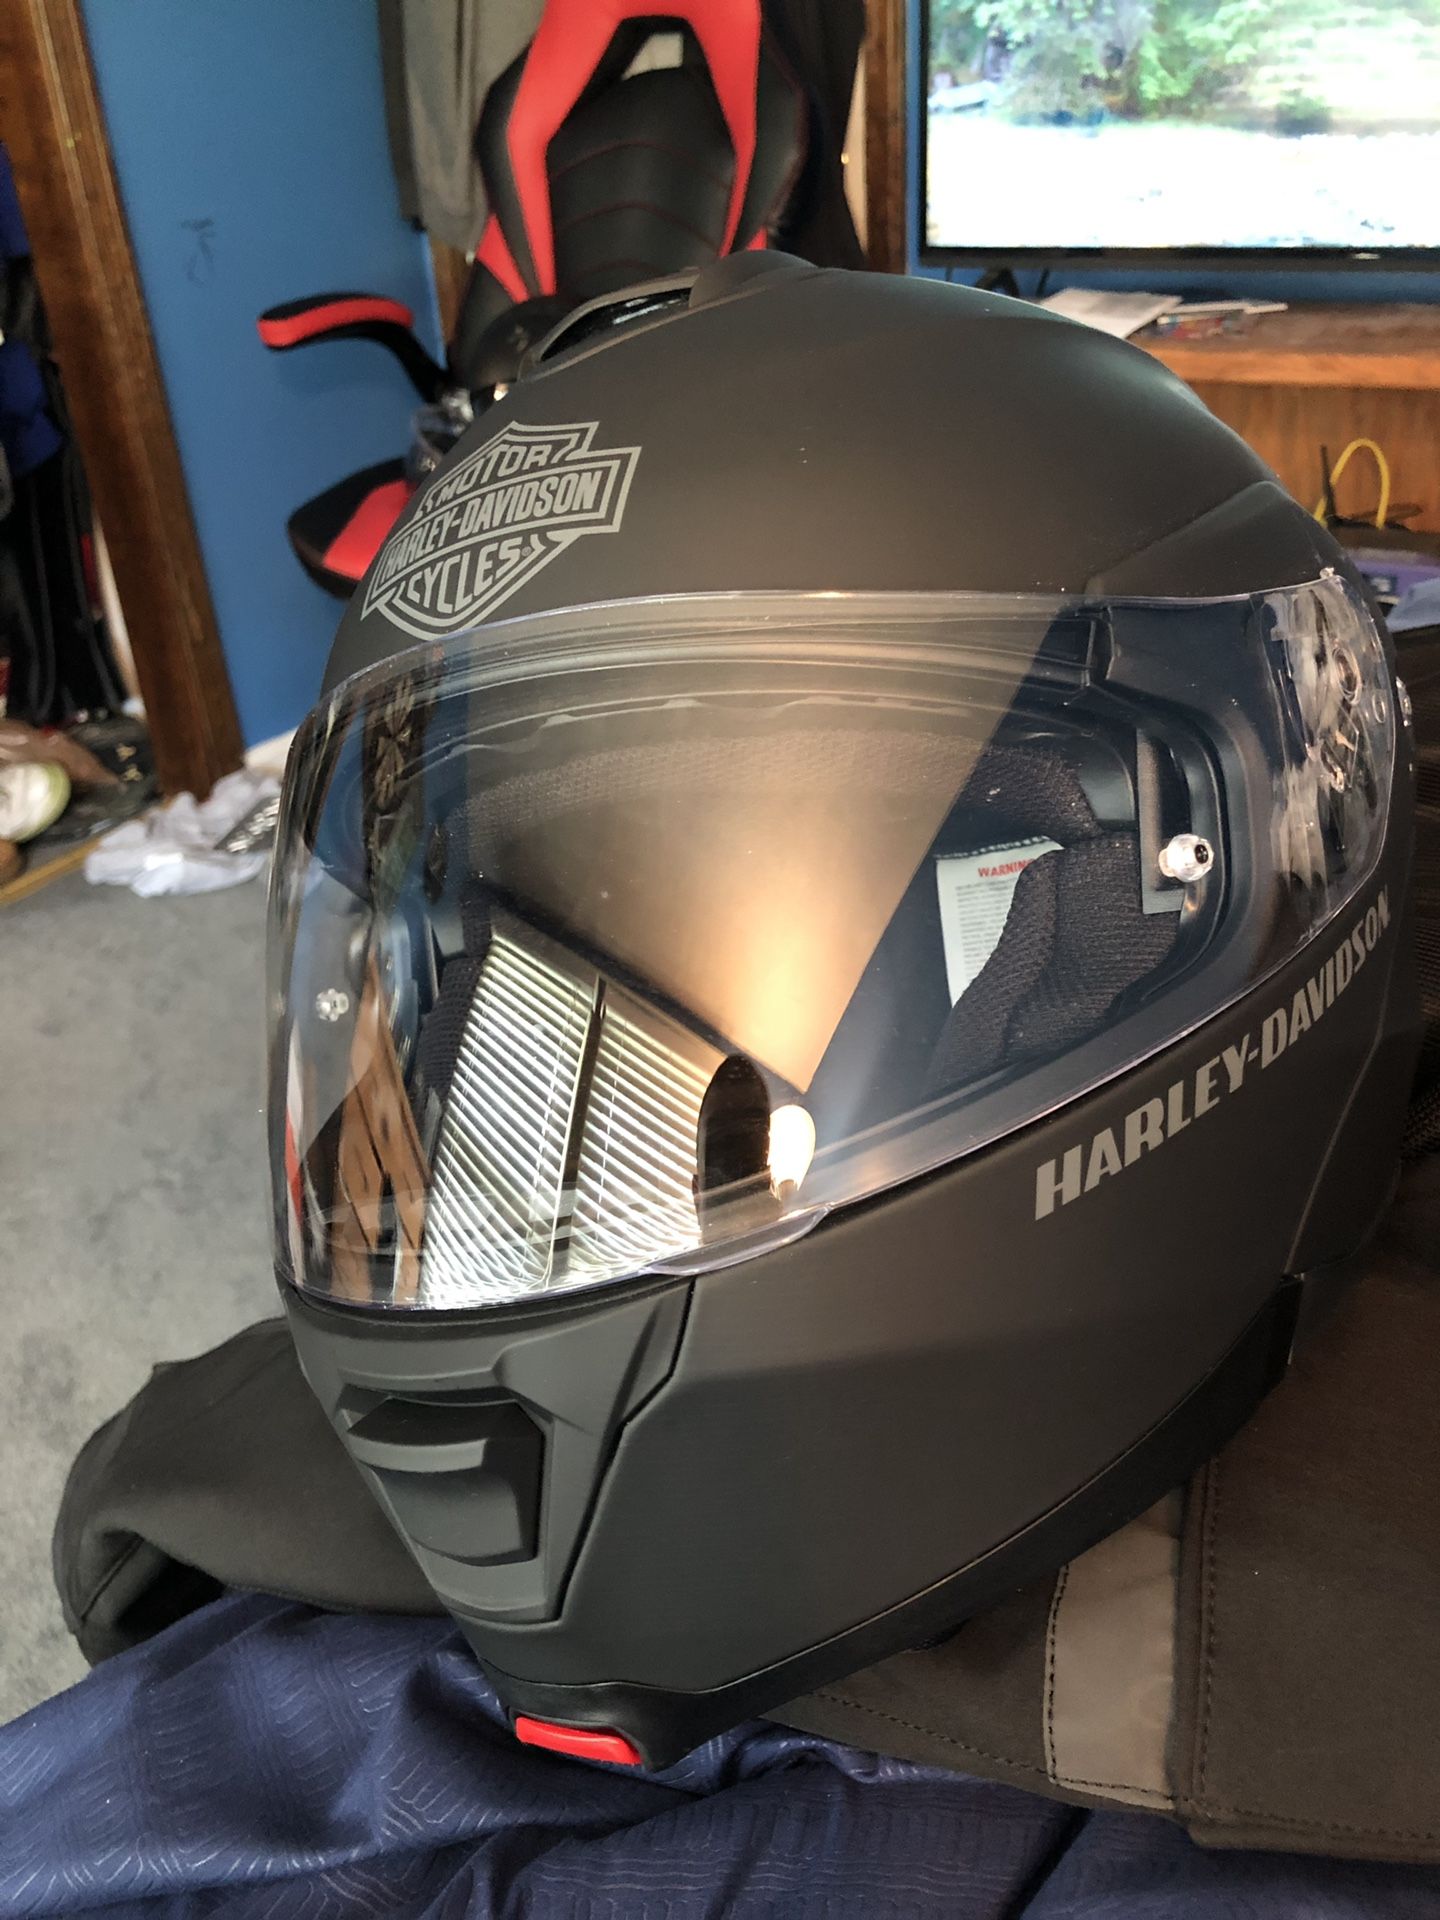 Harley Davidson H24 helmet